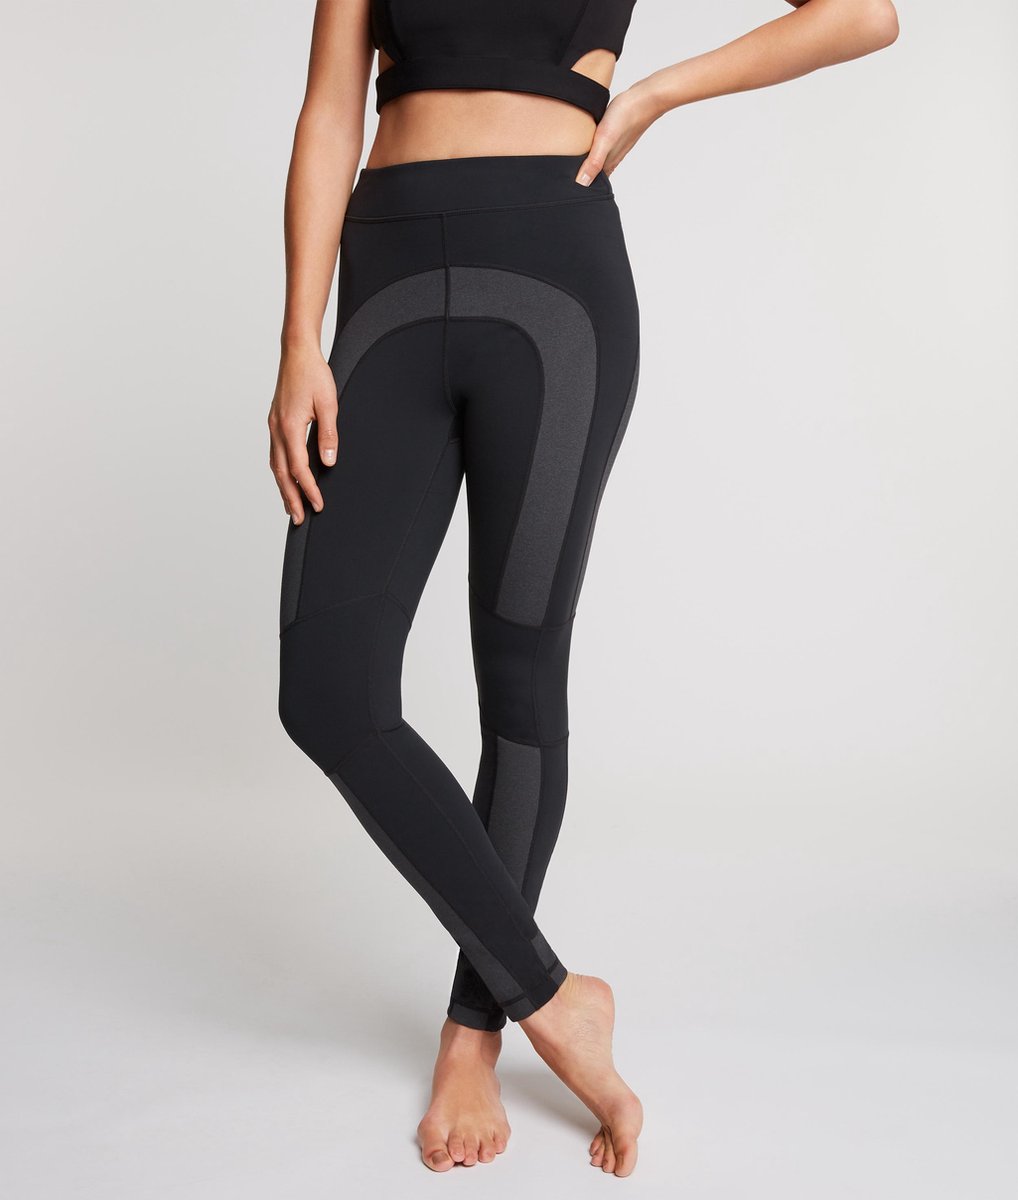 Zense - Dames Yoga Legging Leah Colorblock - Zwart - L